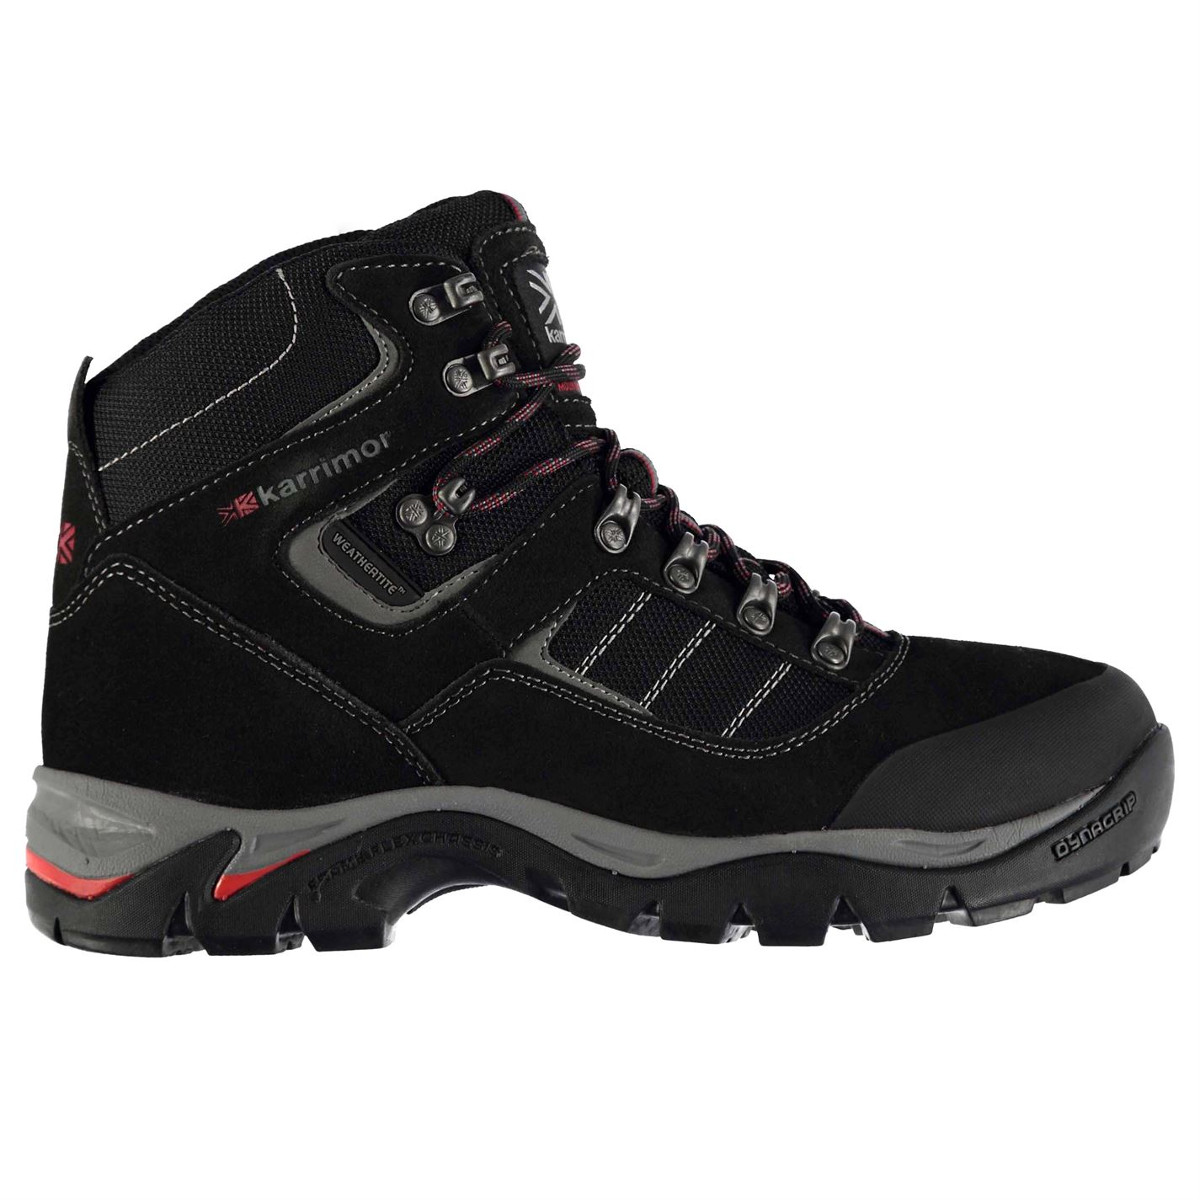 Karrimor Men's Ksb 200 Waterproof Mid Hiking Boots - Black, 8.5